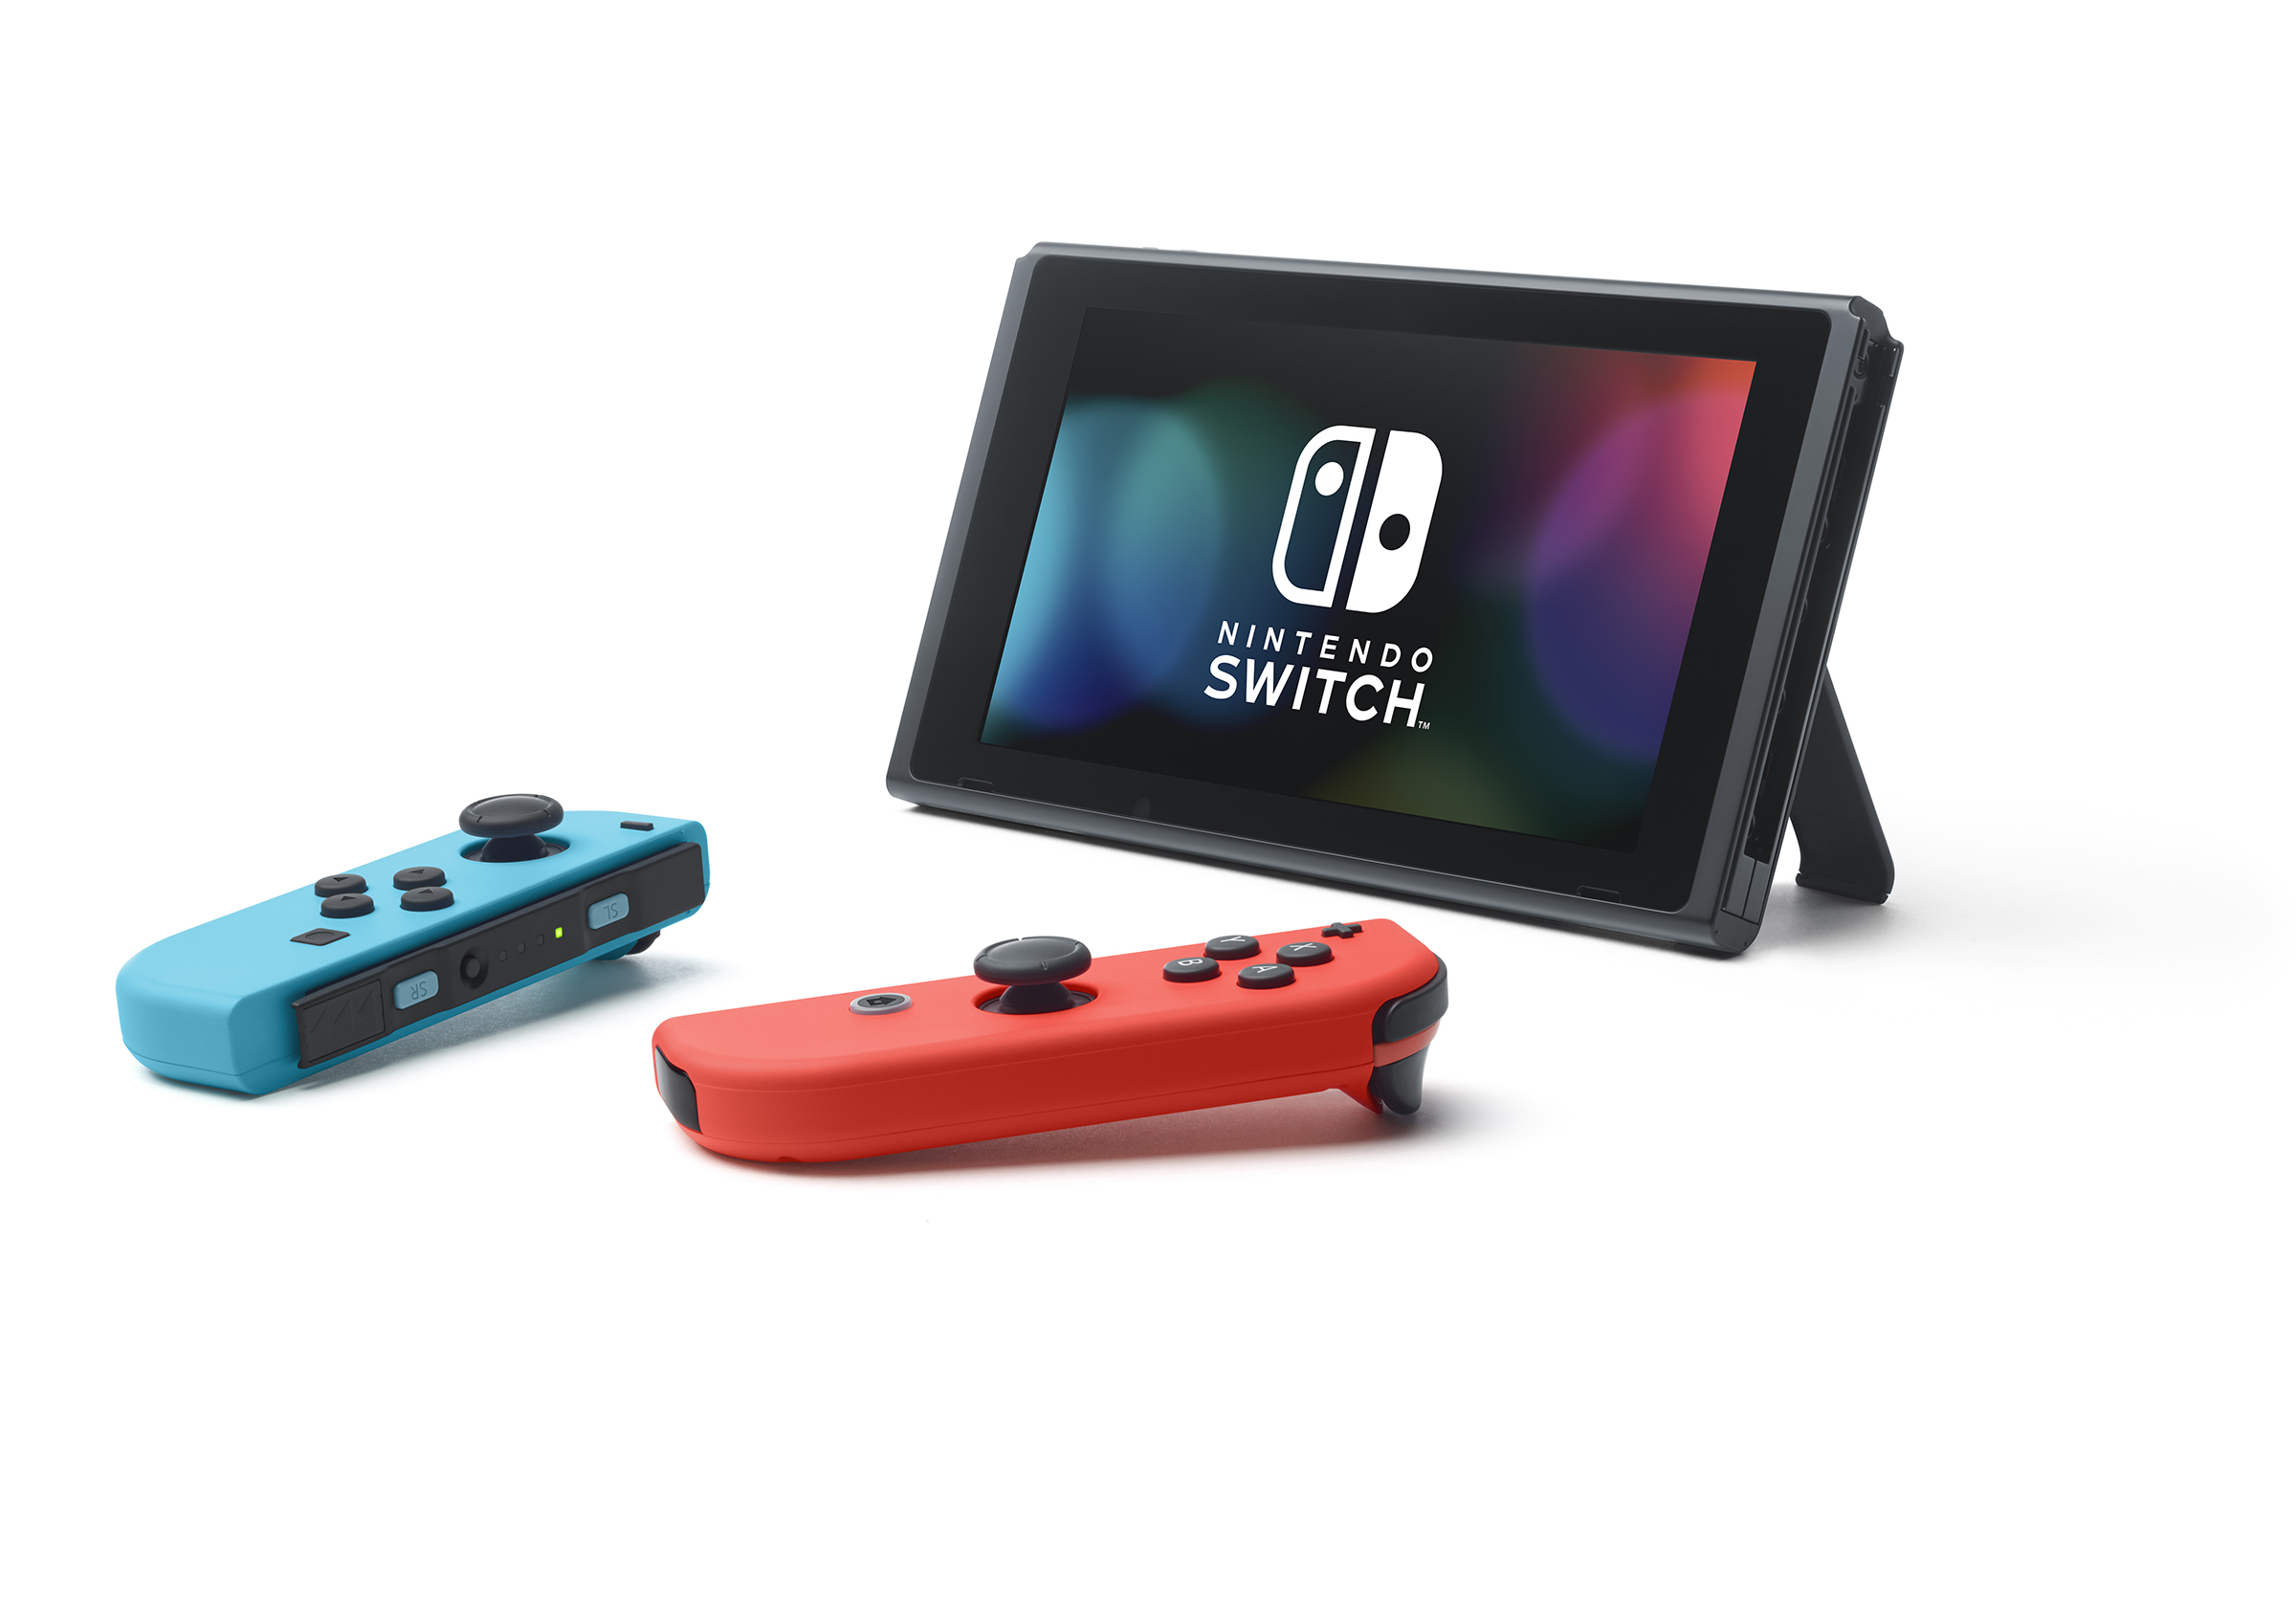 Nintendo Switch device